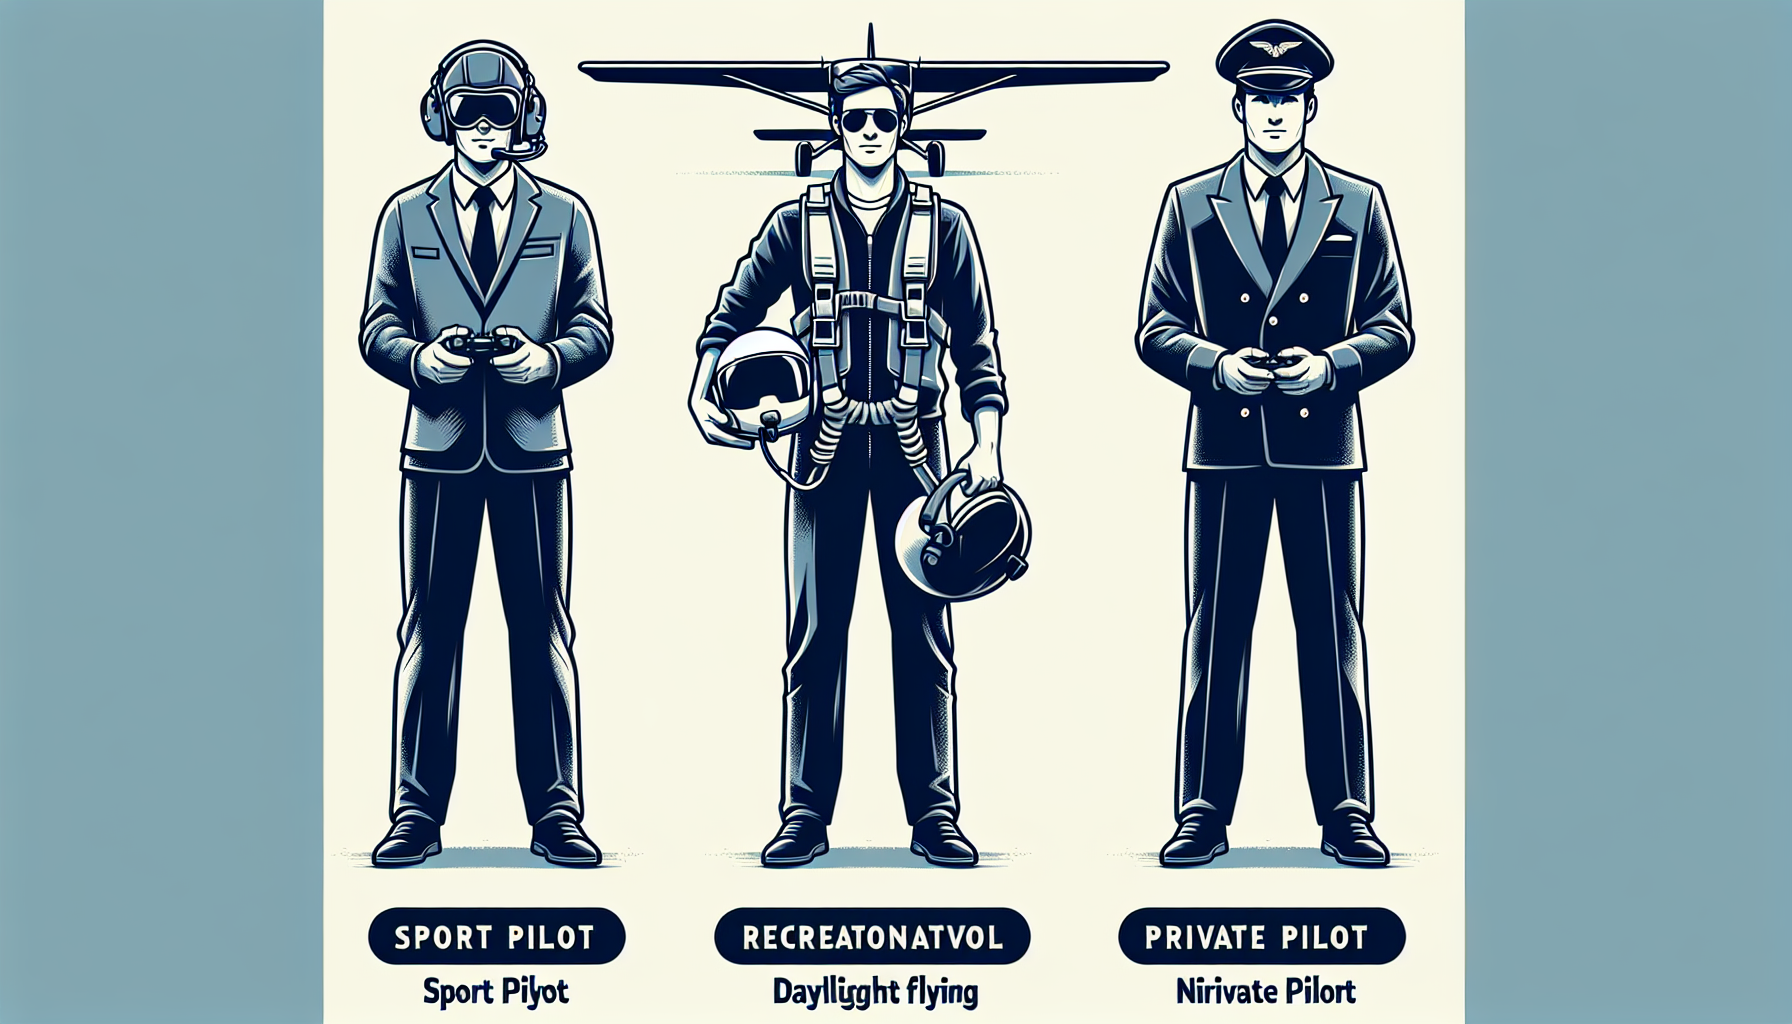 Illustration comparing sport pilot, recreational, and private pilot licenses